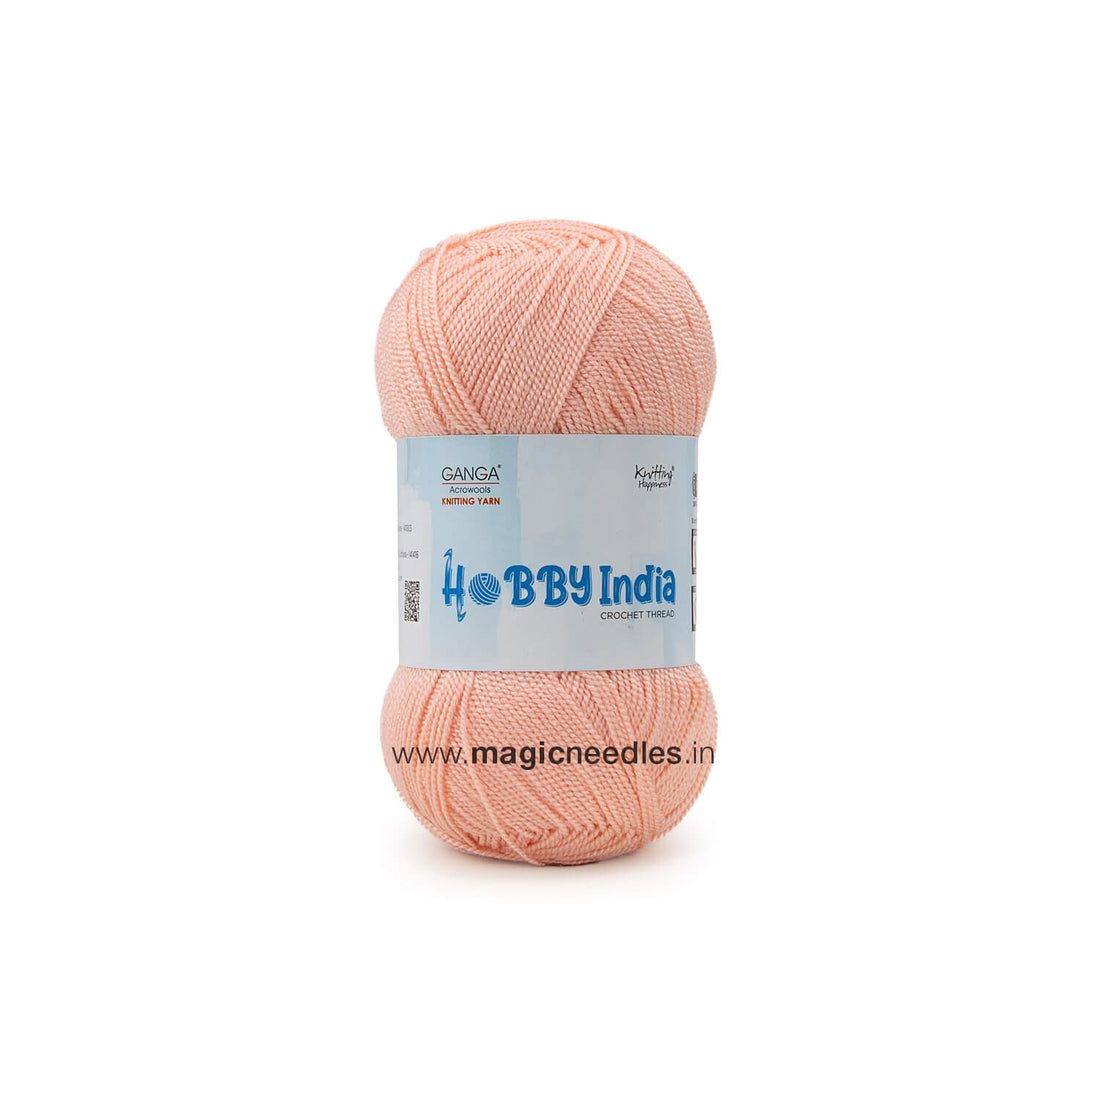 Ganga Hobby India Crochet Thread - Pink 70